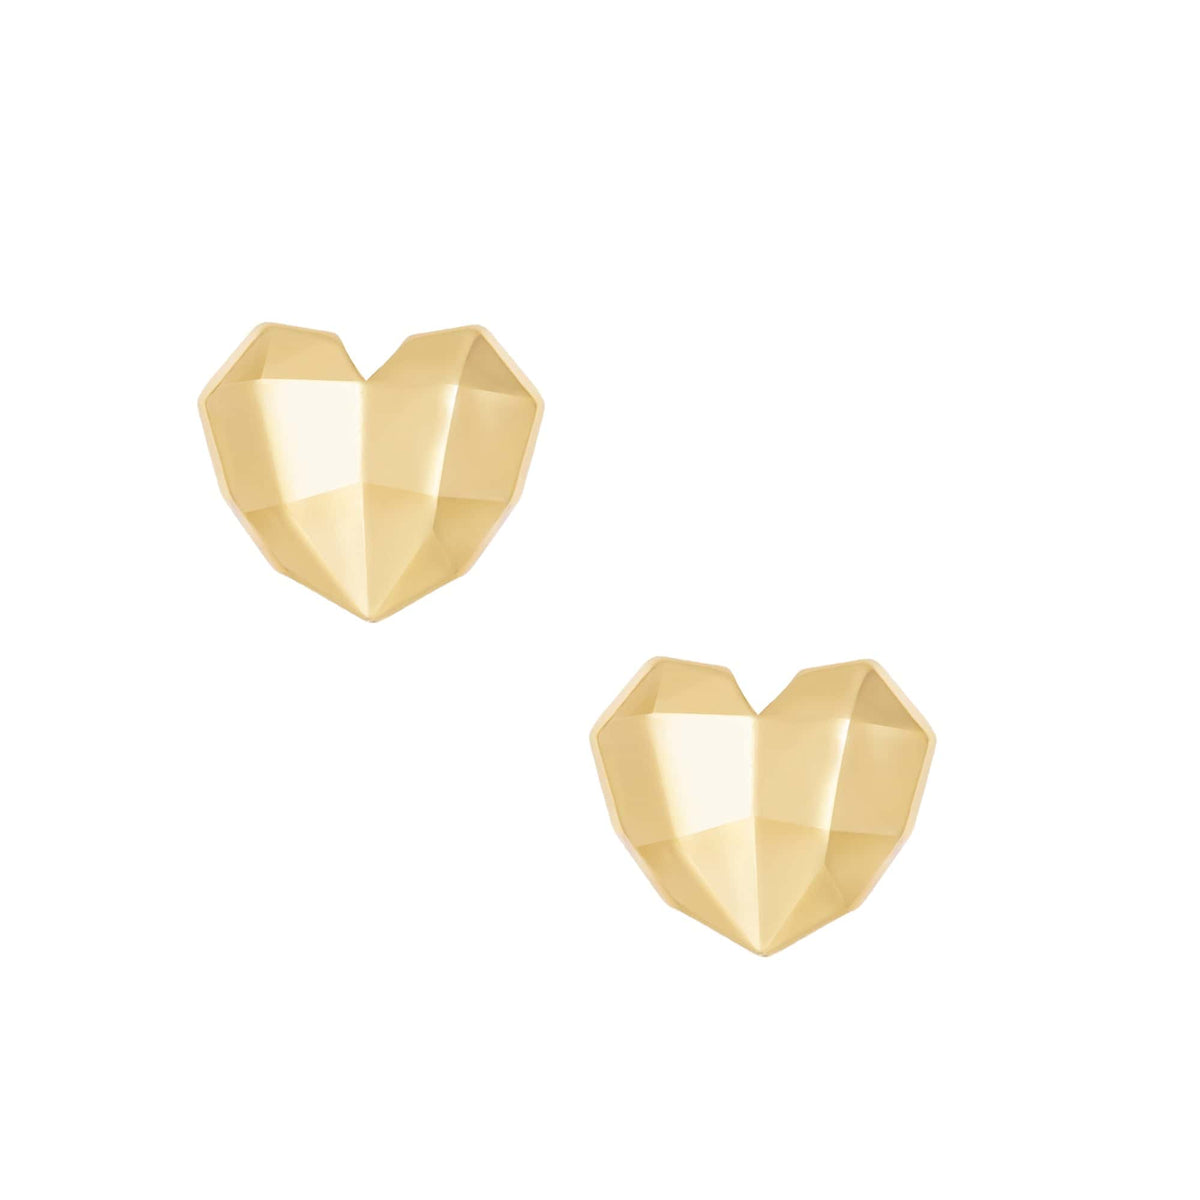 BohoMoon Stainless Steel Motive Stud Earrings Gold